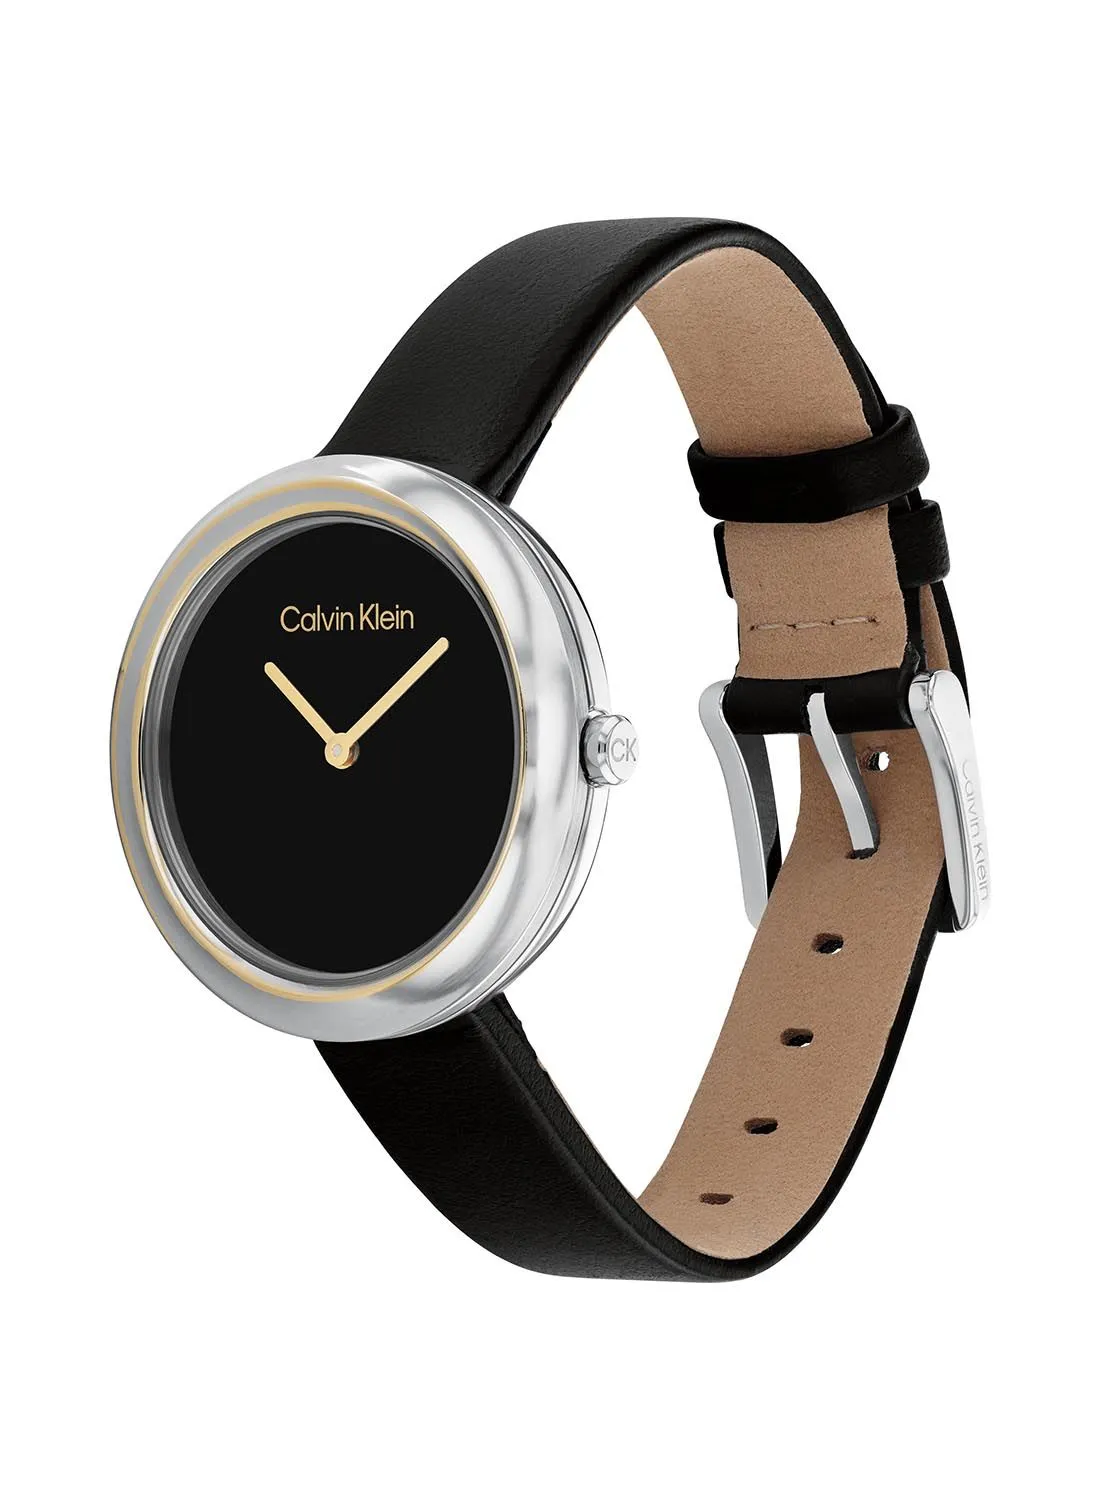 CALVIN KLEIN Analog Round Waterproof  Wrist Watch With Leather Strap  25200093